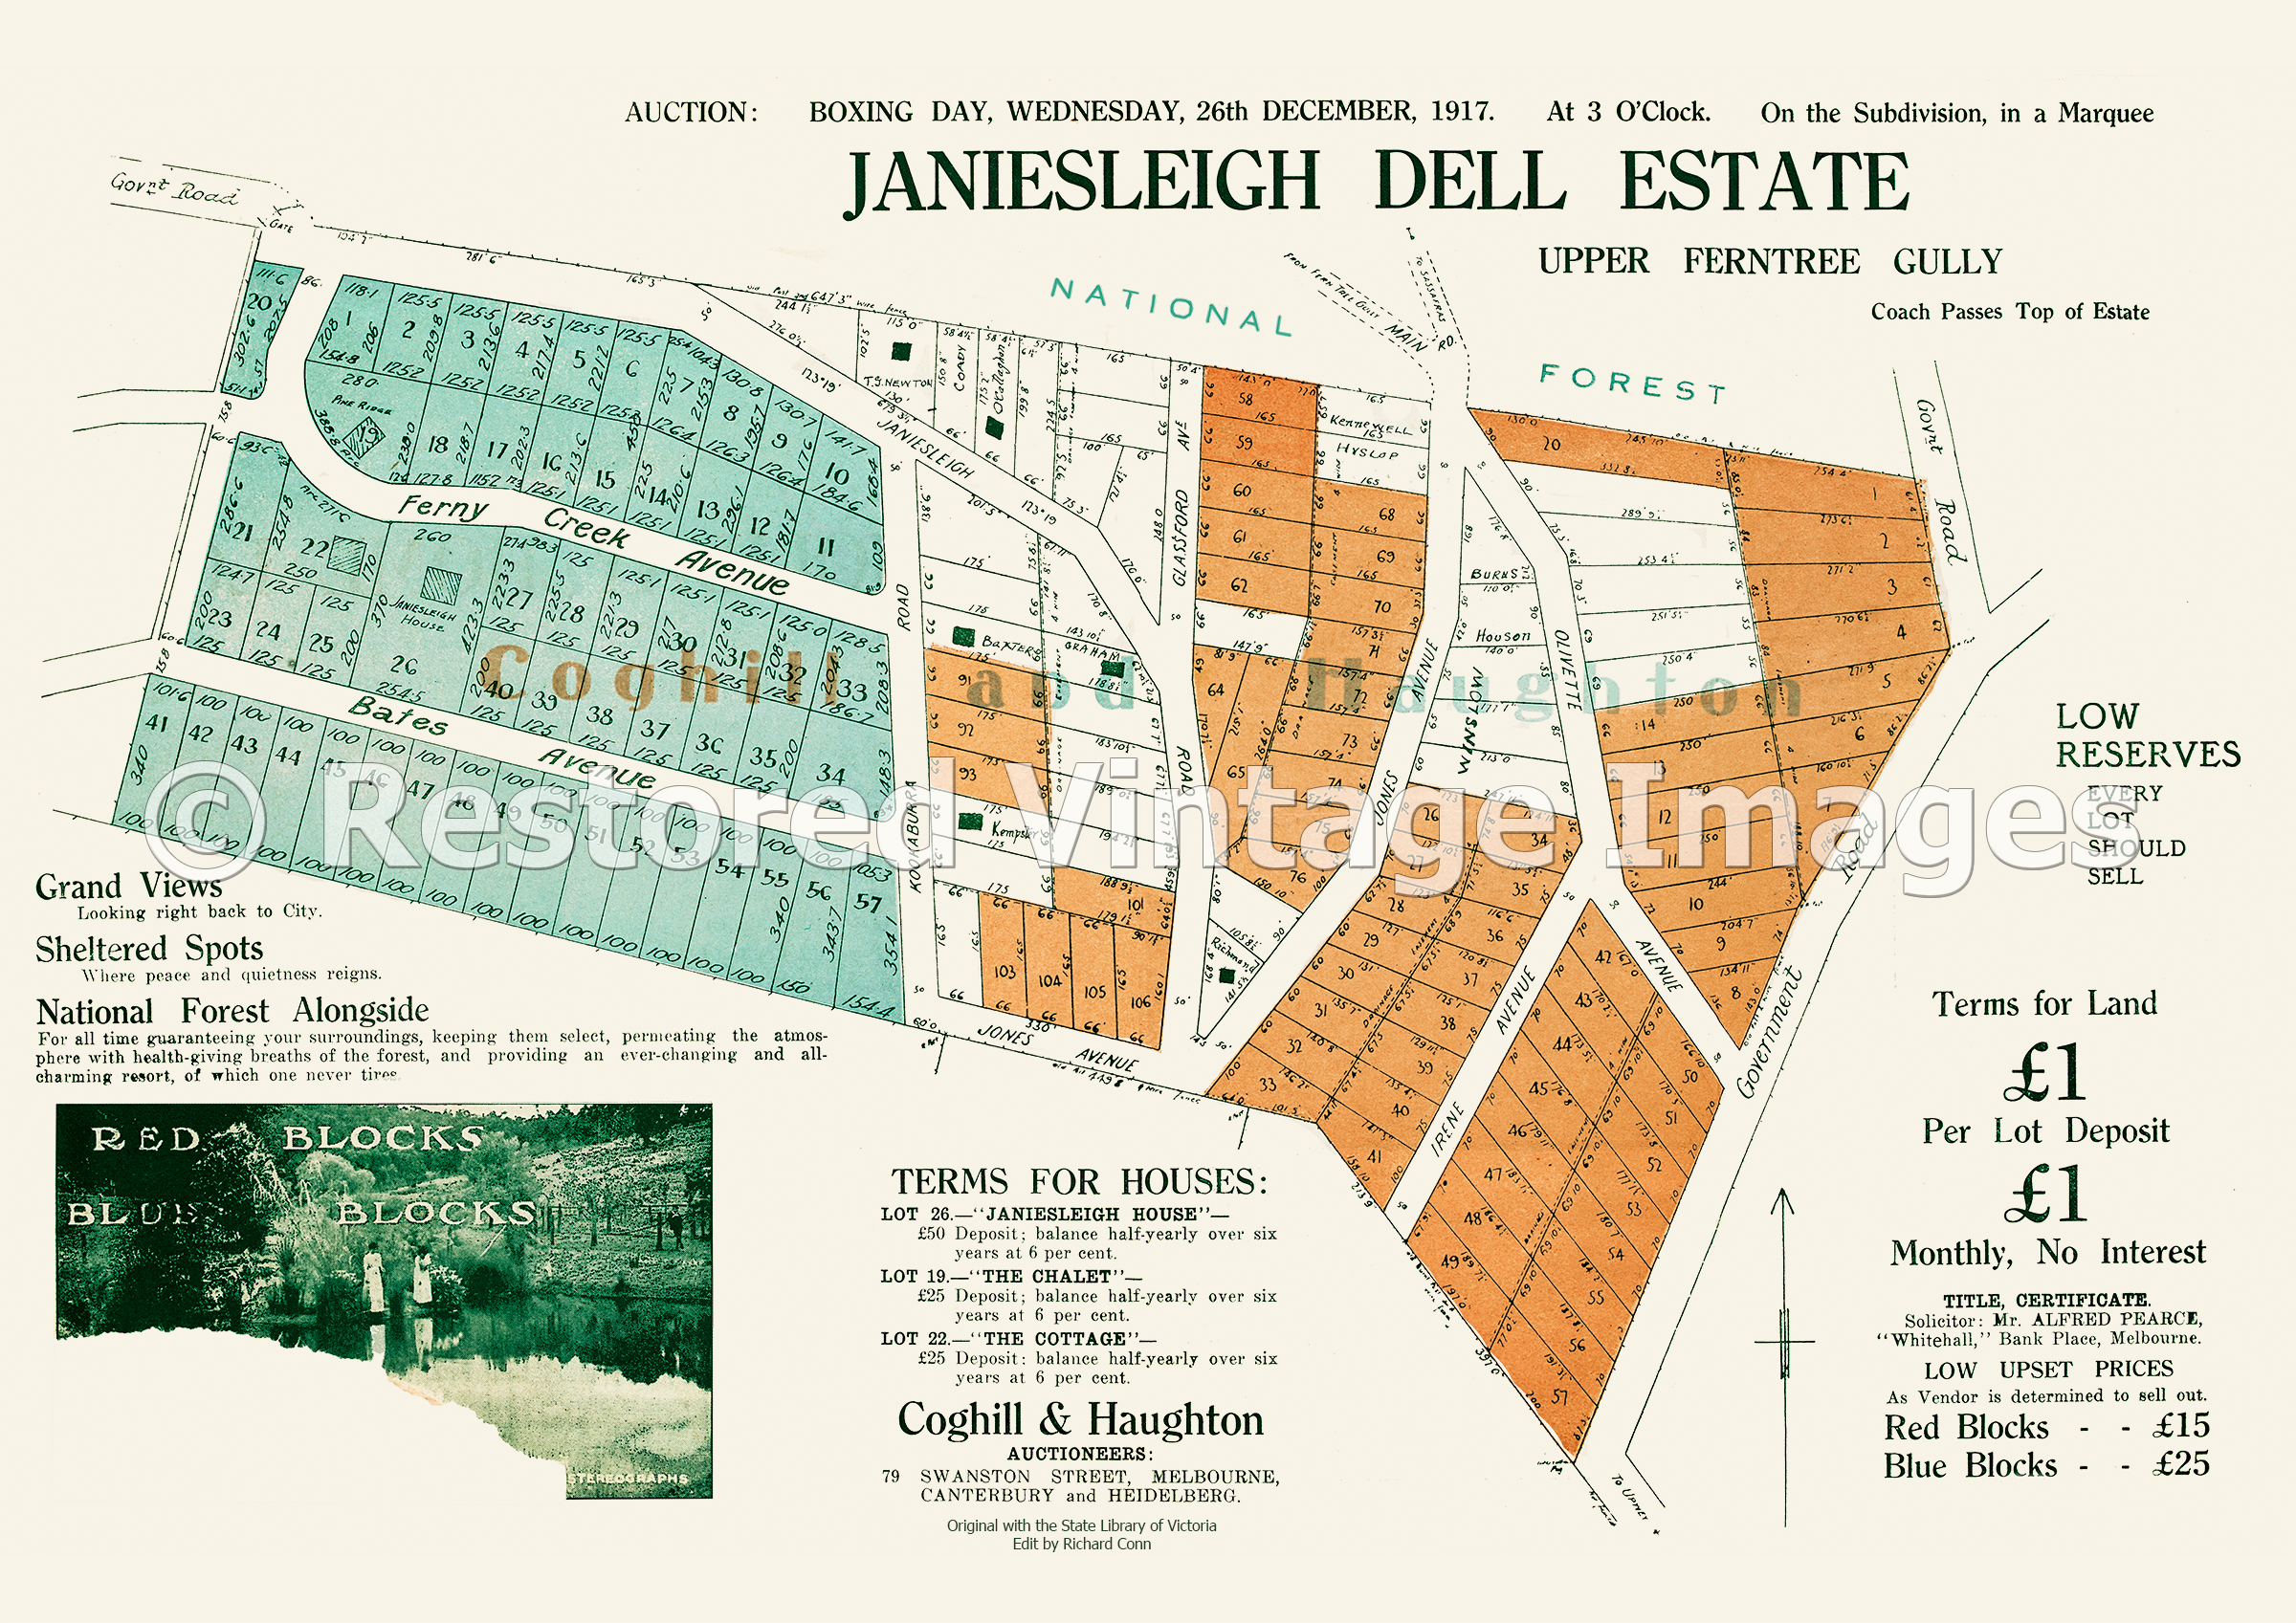 Janiesleigh Dell Estate 26th December 1917 – Upper Ferntree Gully